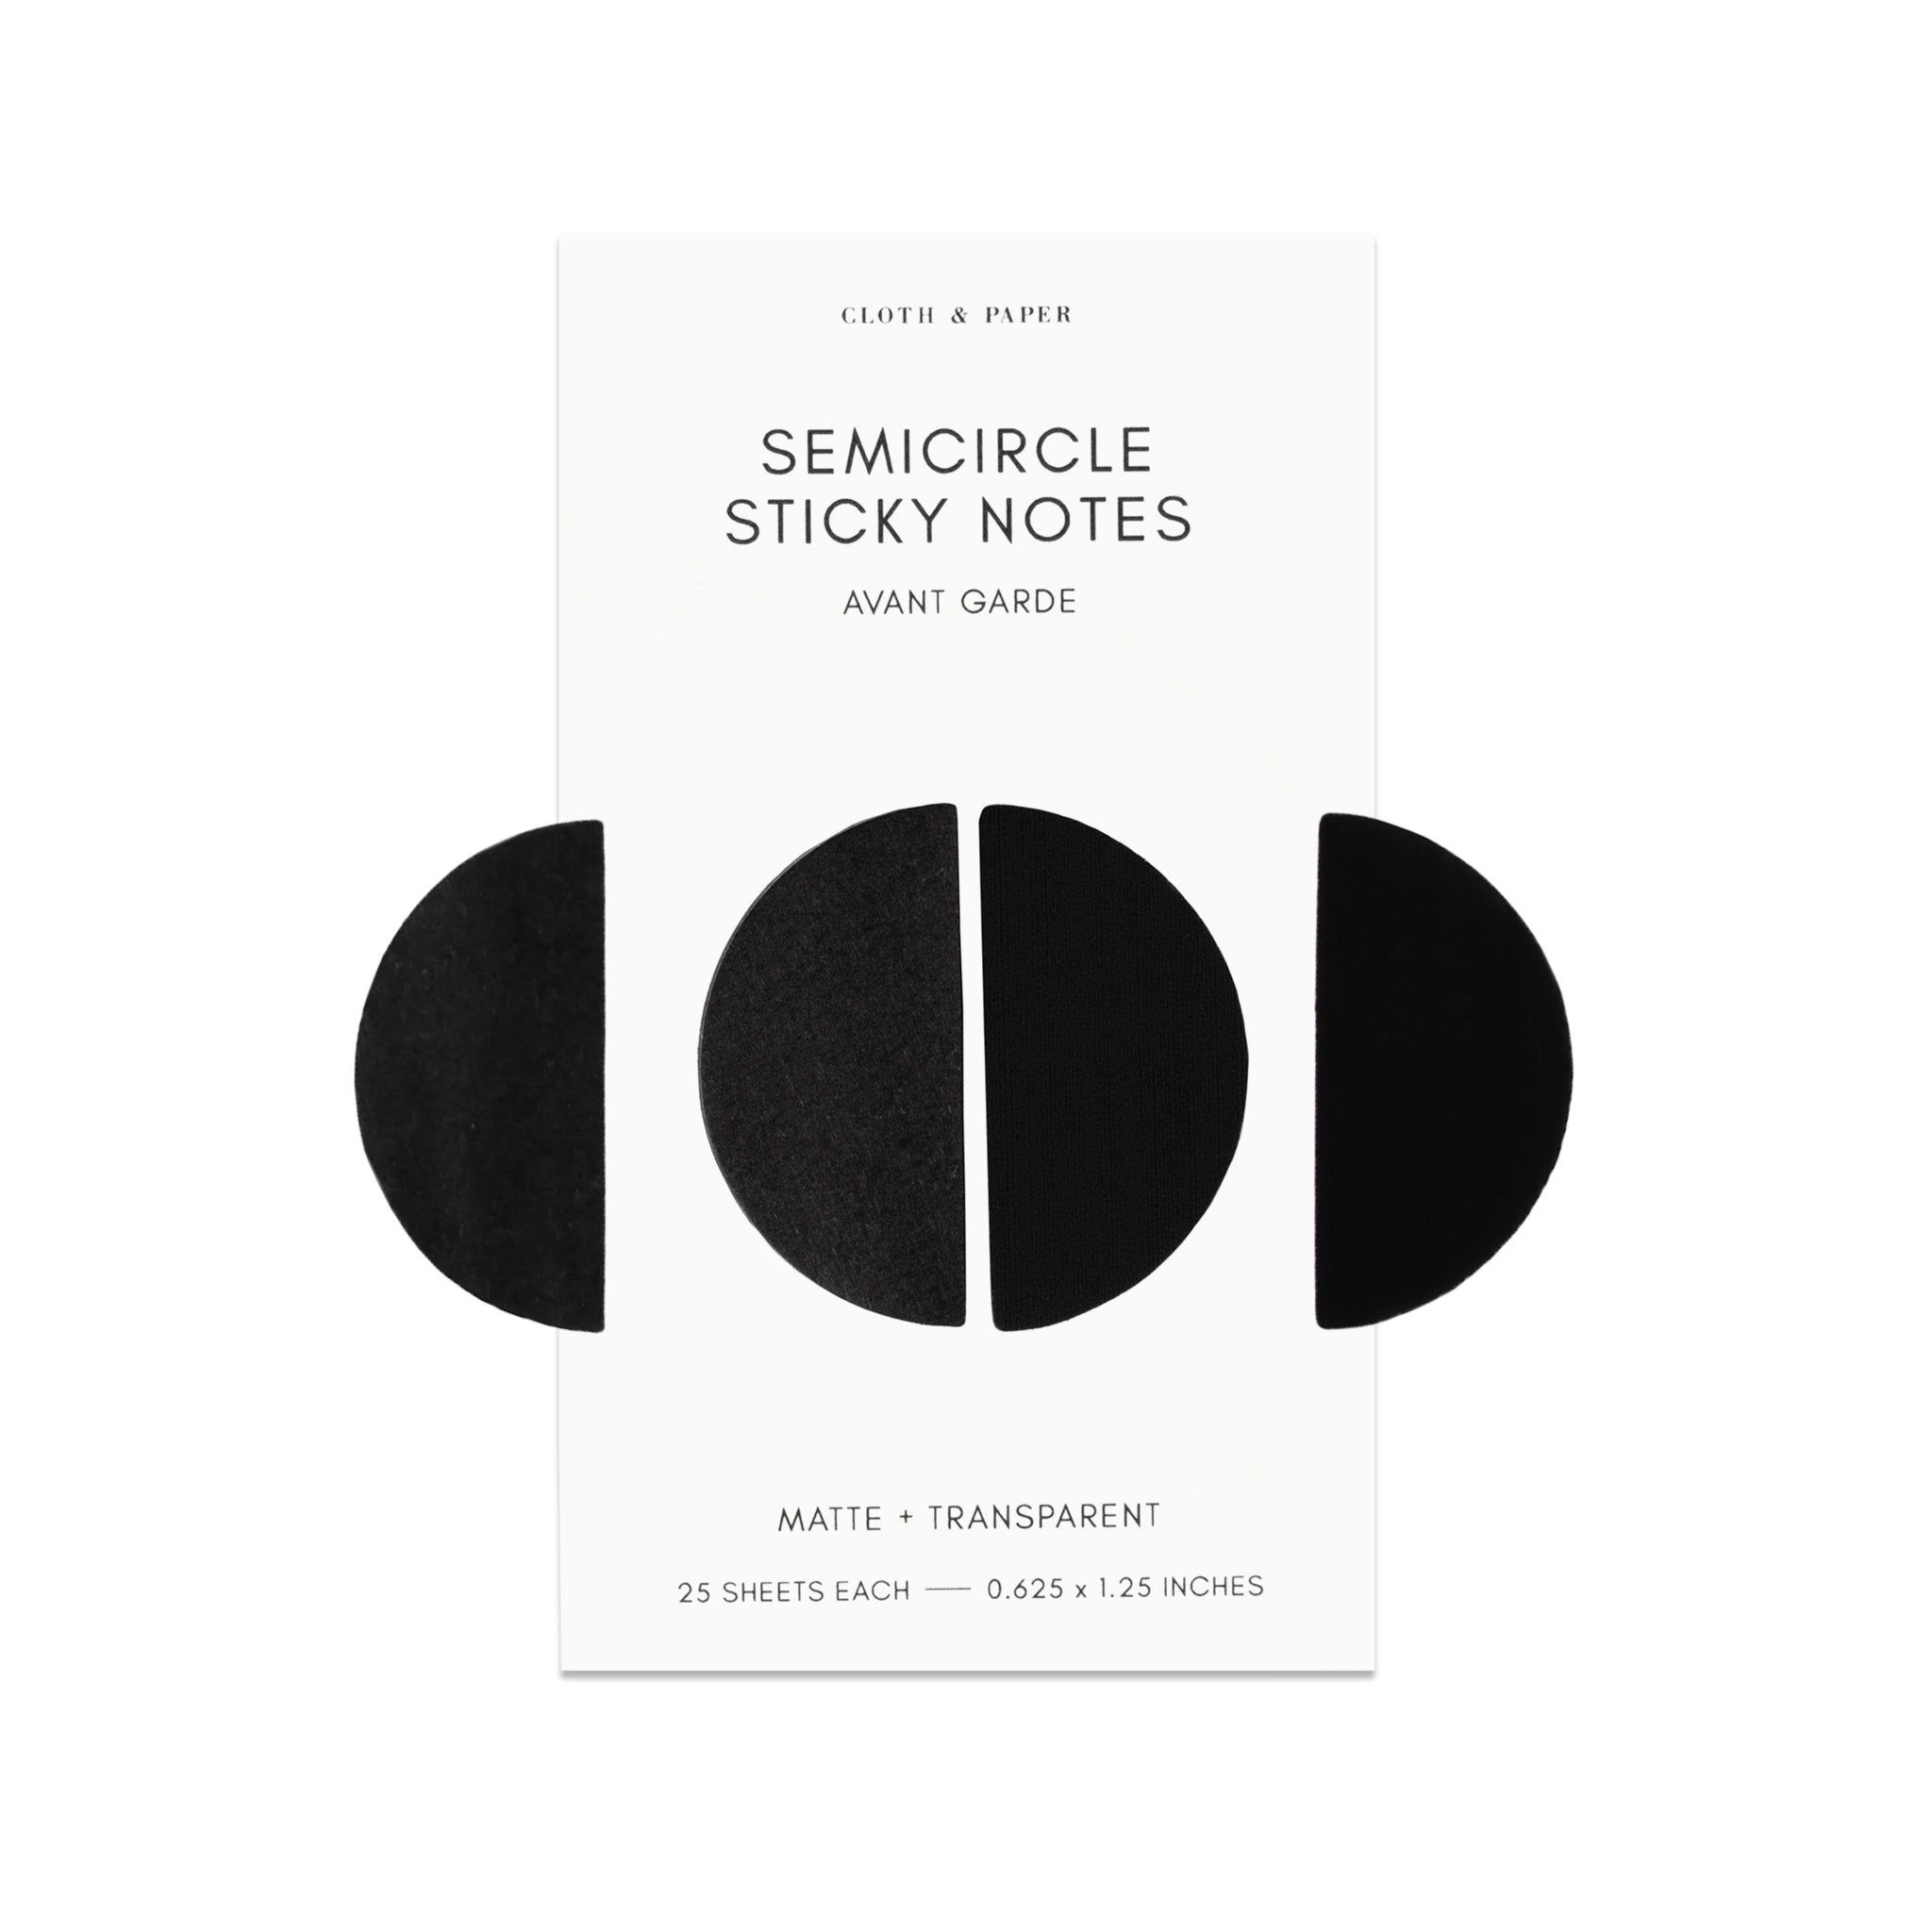 Semicircle Sticky Notes, Avant Garde